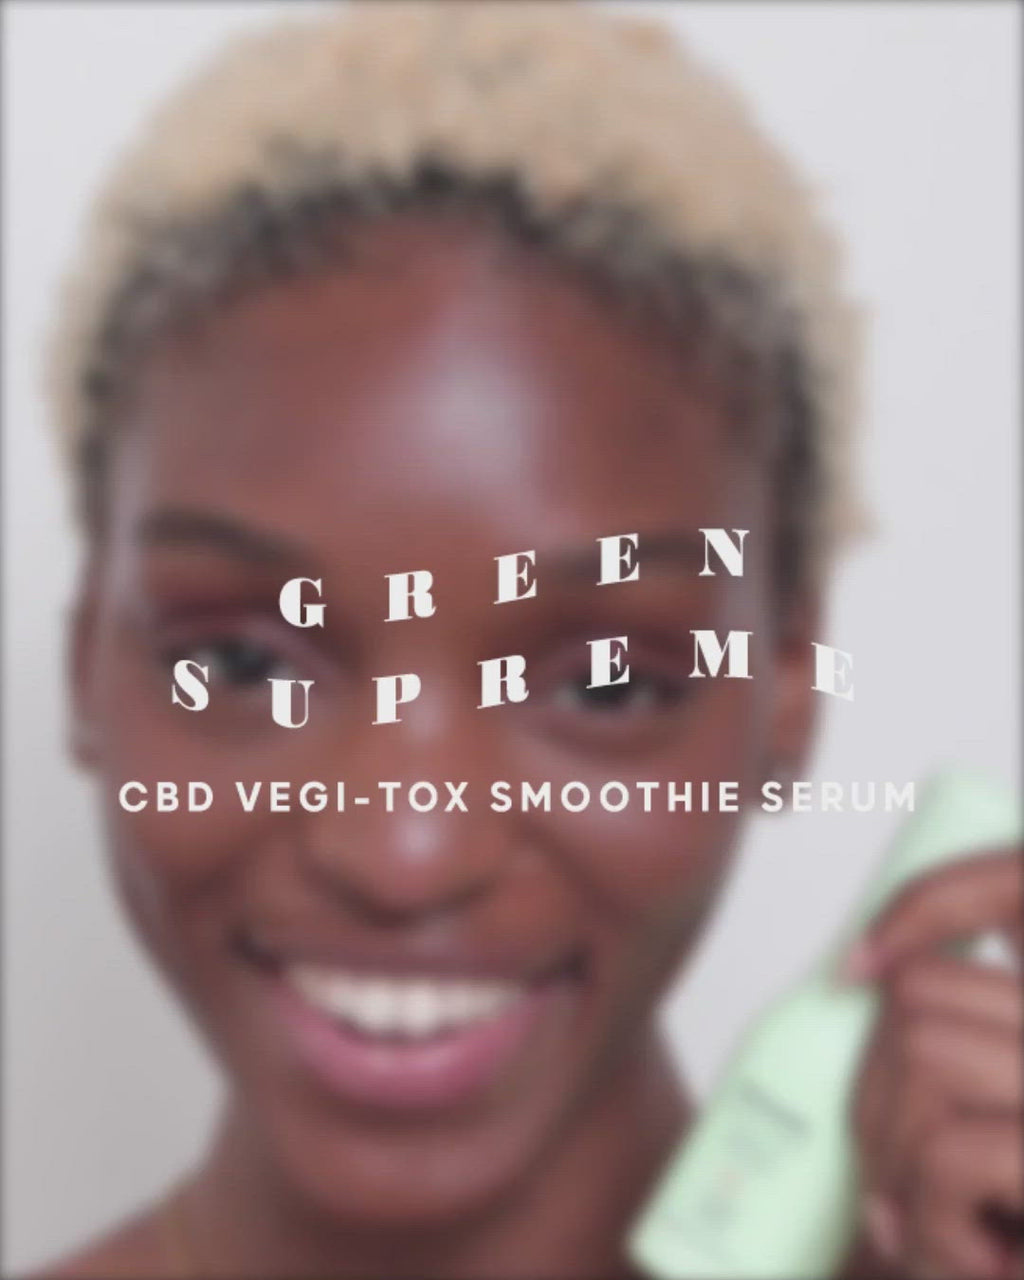 Video showing how to use CBD VEGI-TOX™ Smoothie Serum